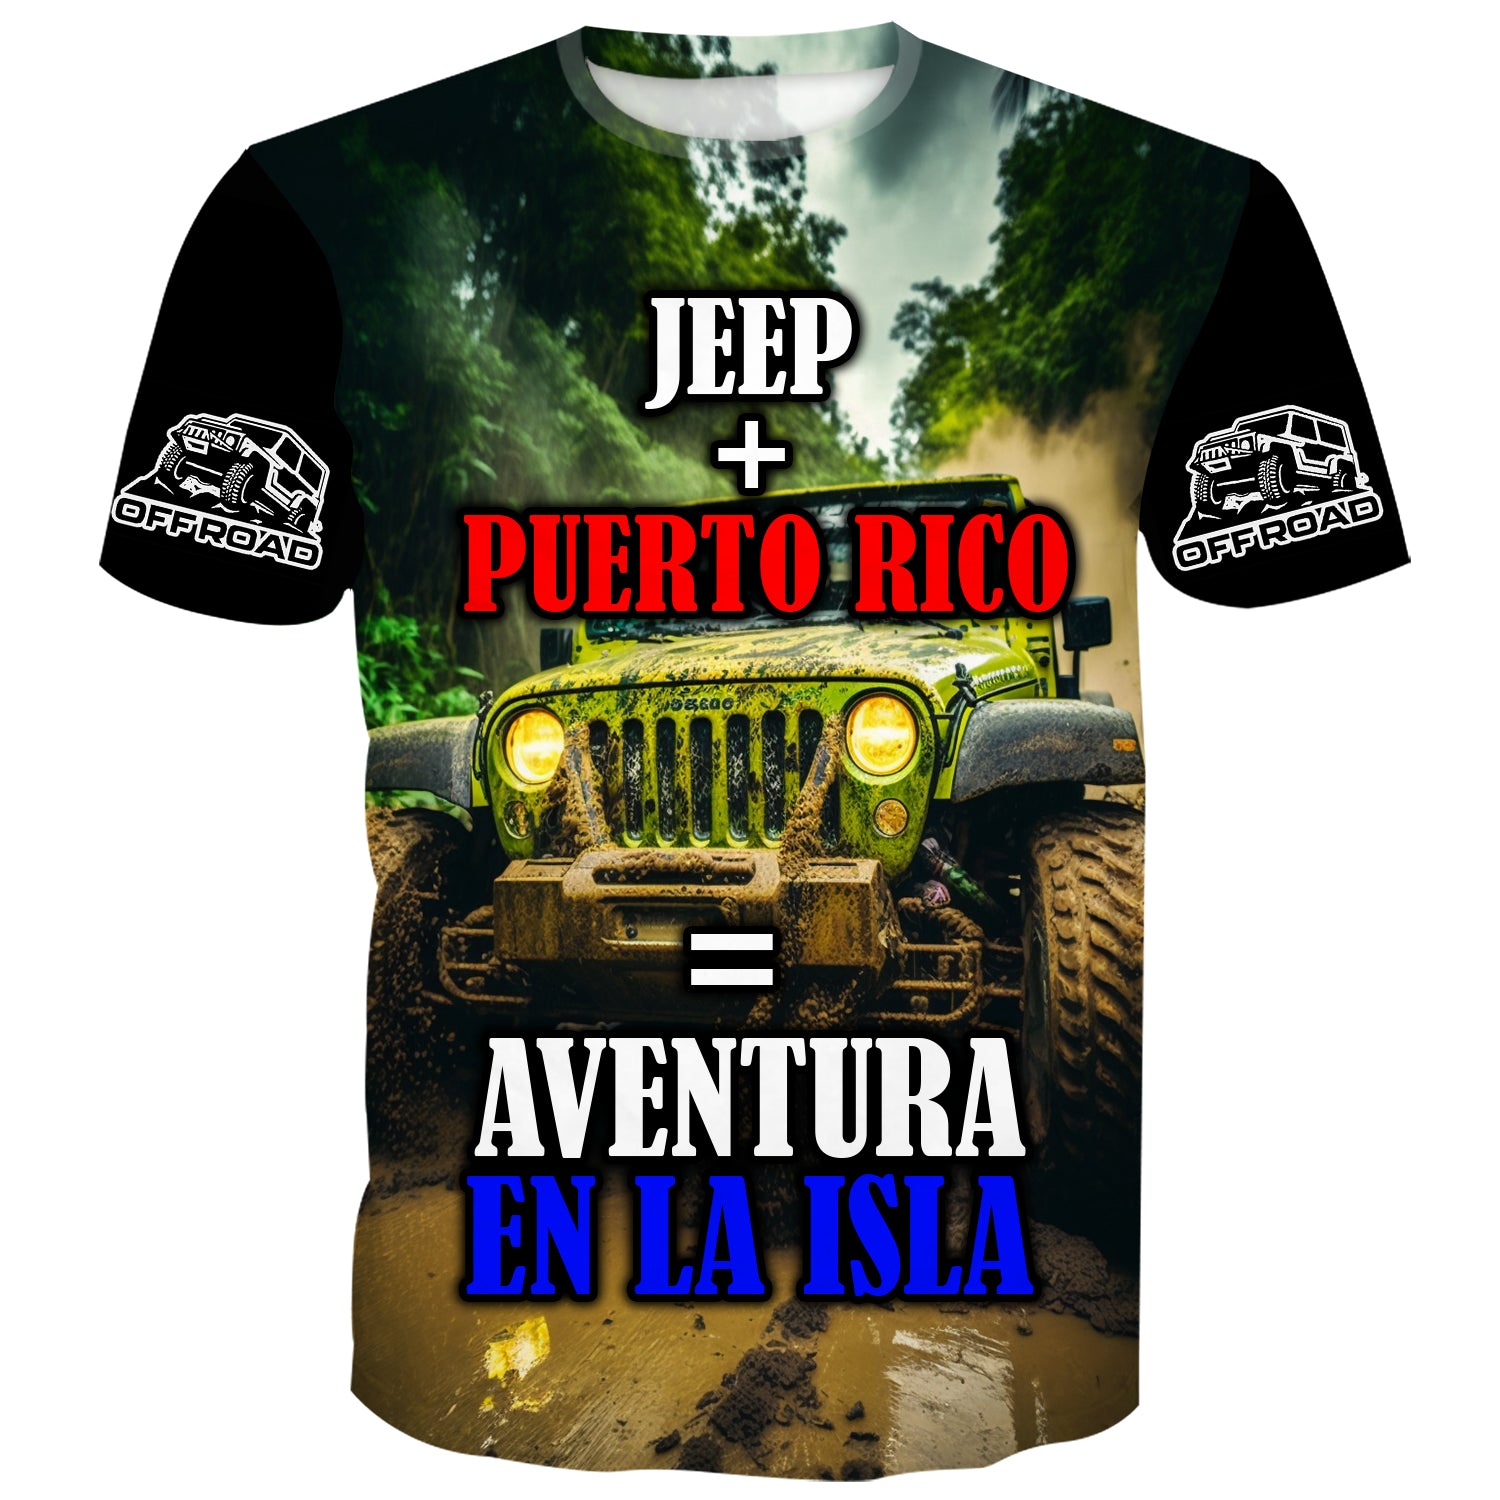 Jeep + Puerto Rico Aventura En La Isla - T-Shirt